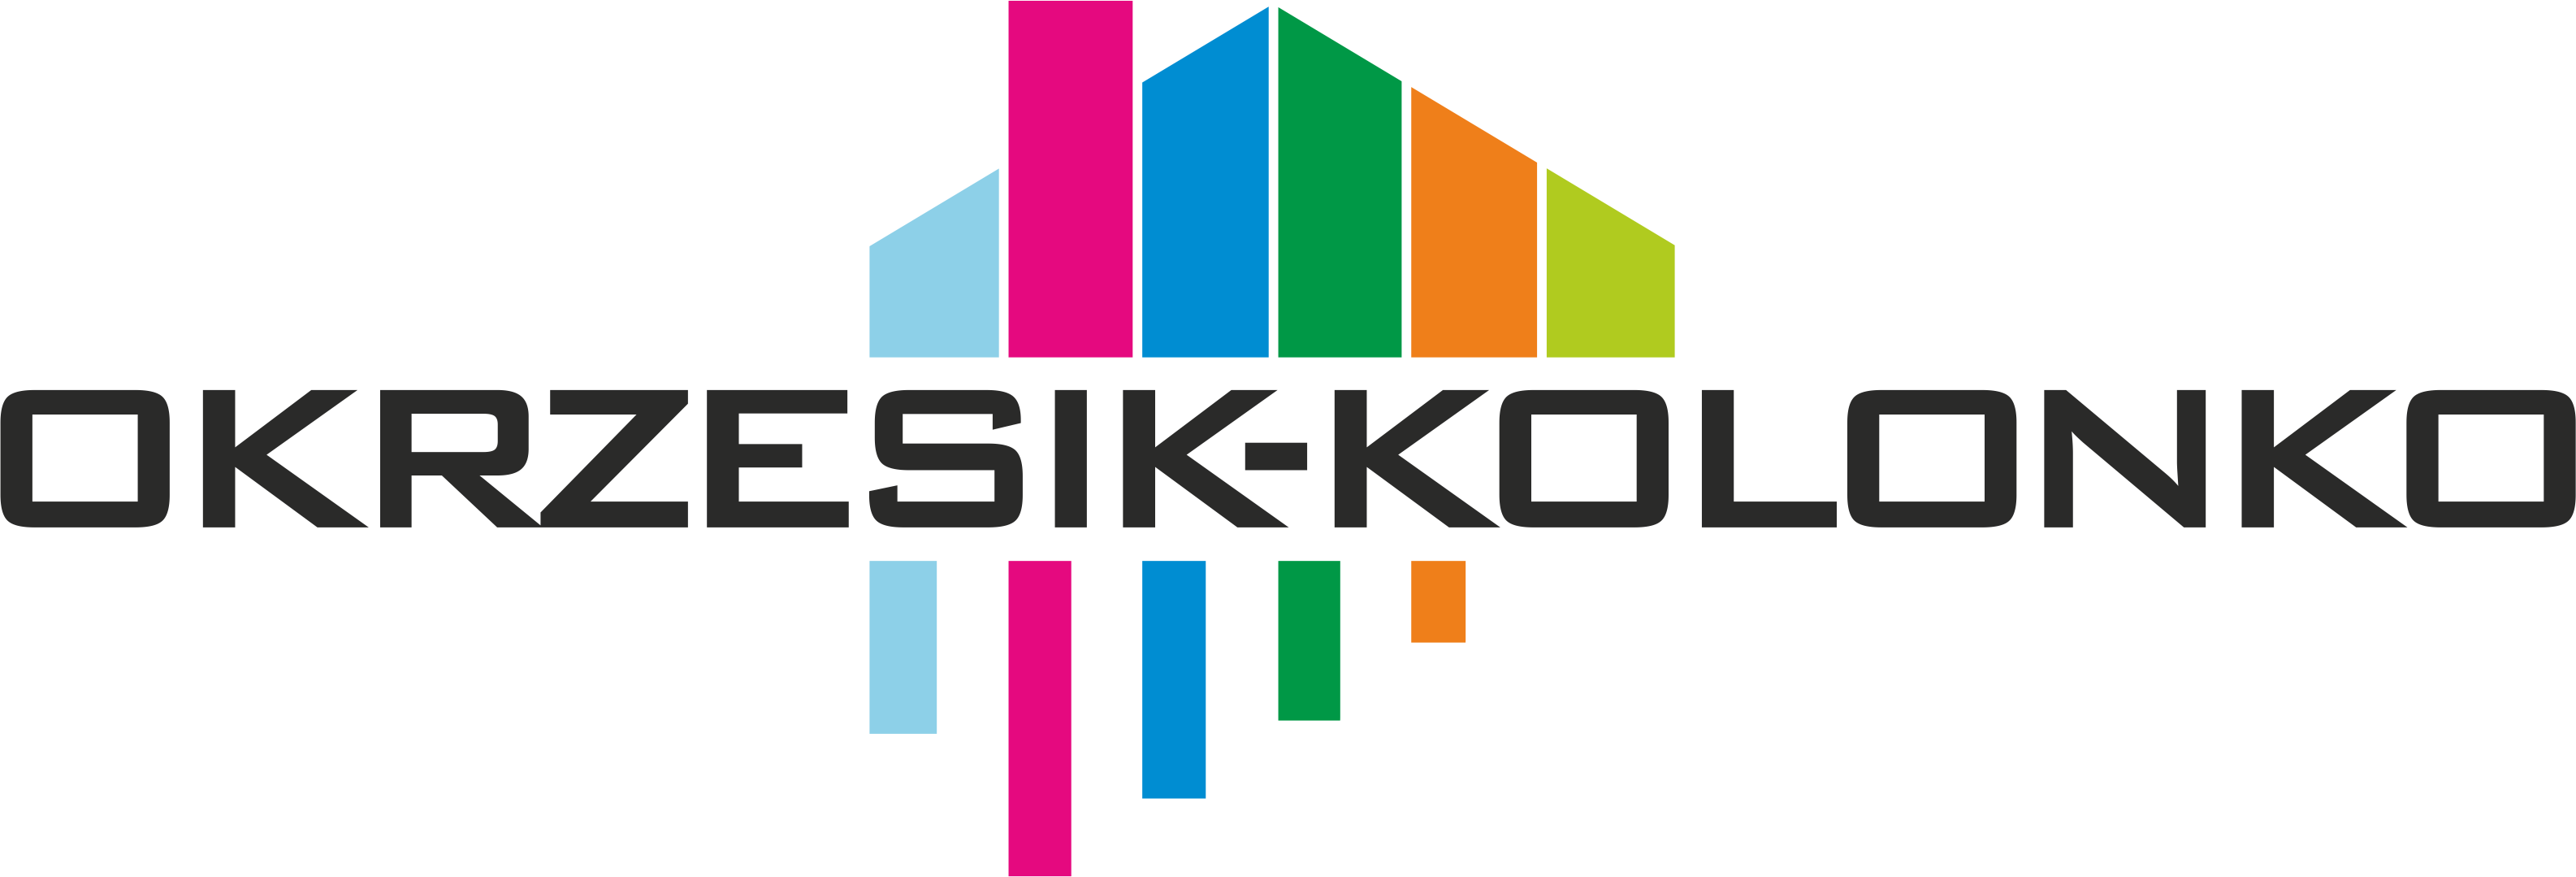 Logo Okrzesik Kolonko